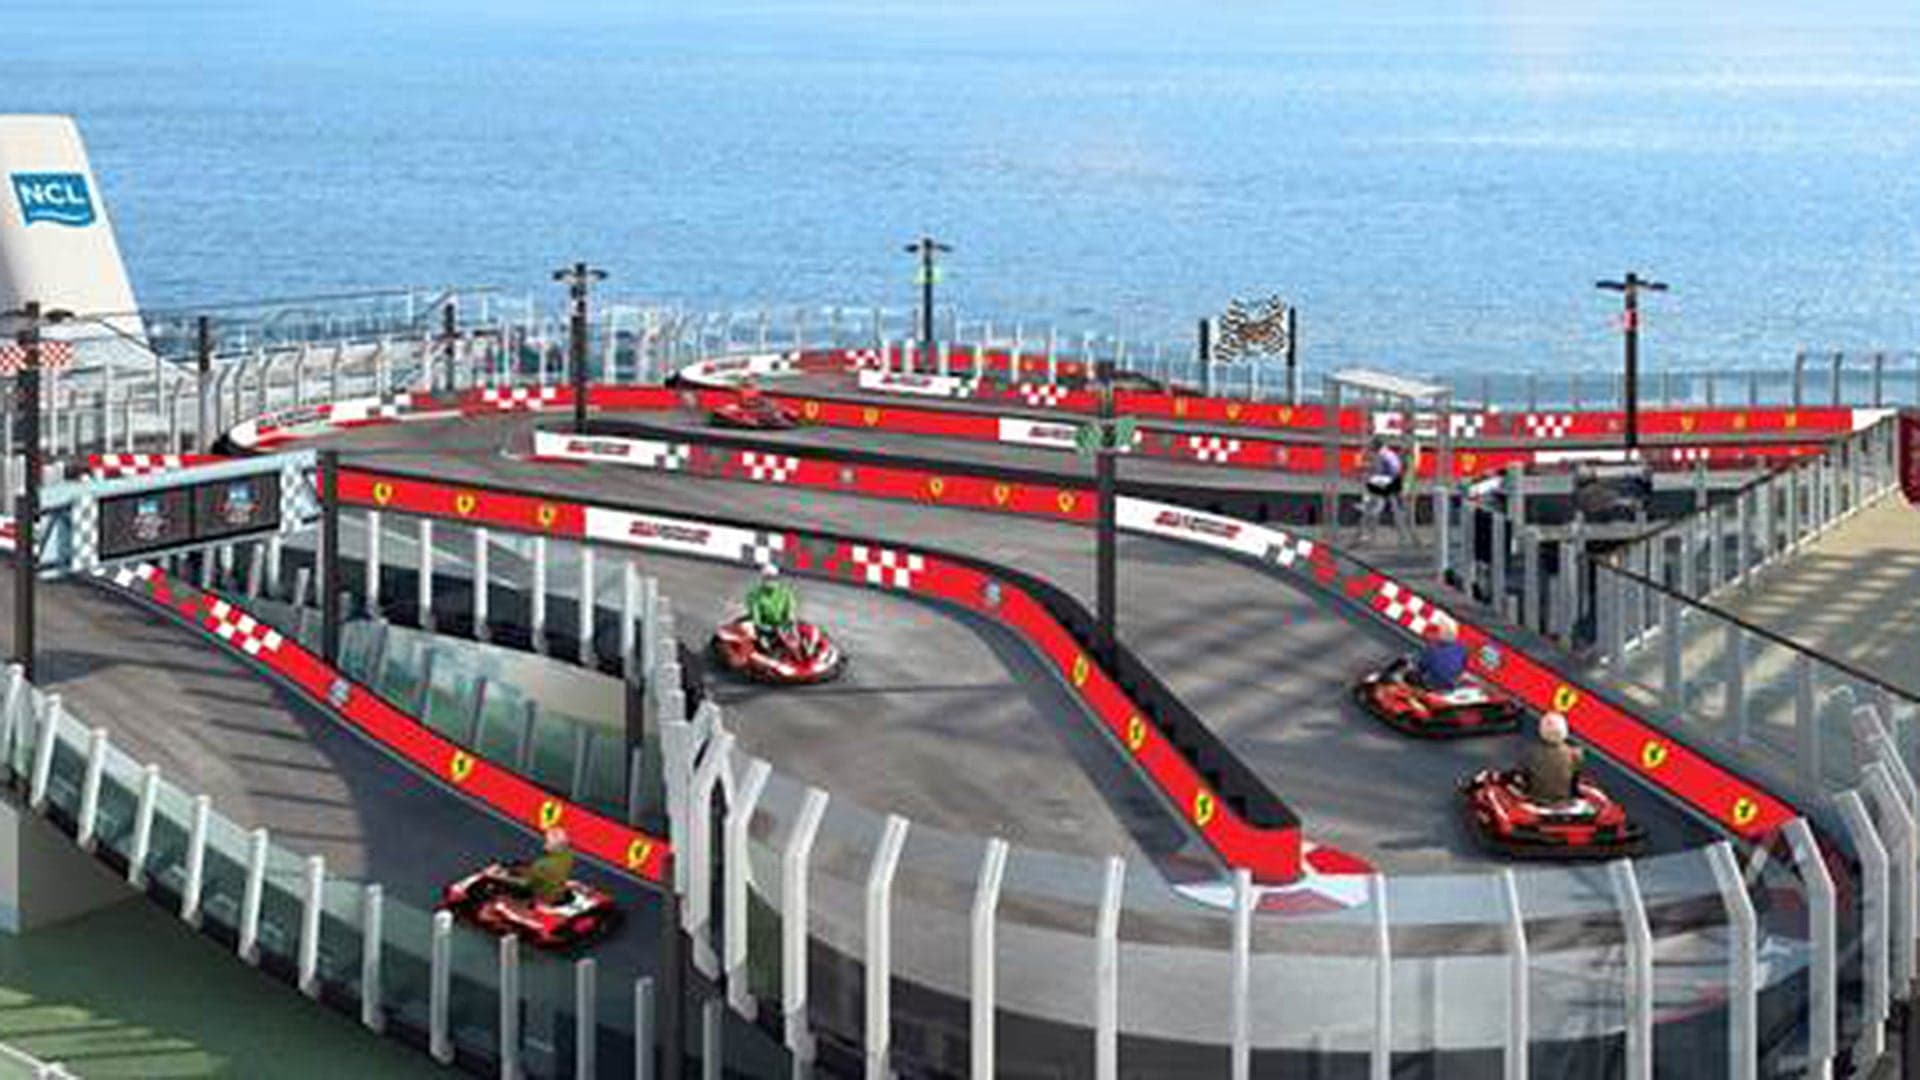 Norwegian Cruise Lines Put a Ferrari Race Track on a New Cruise Ship